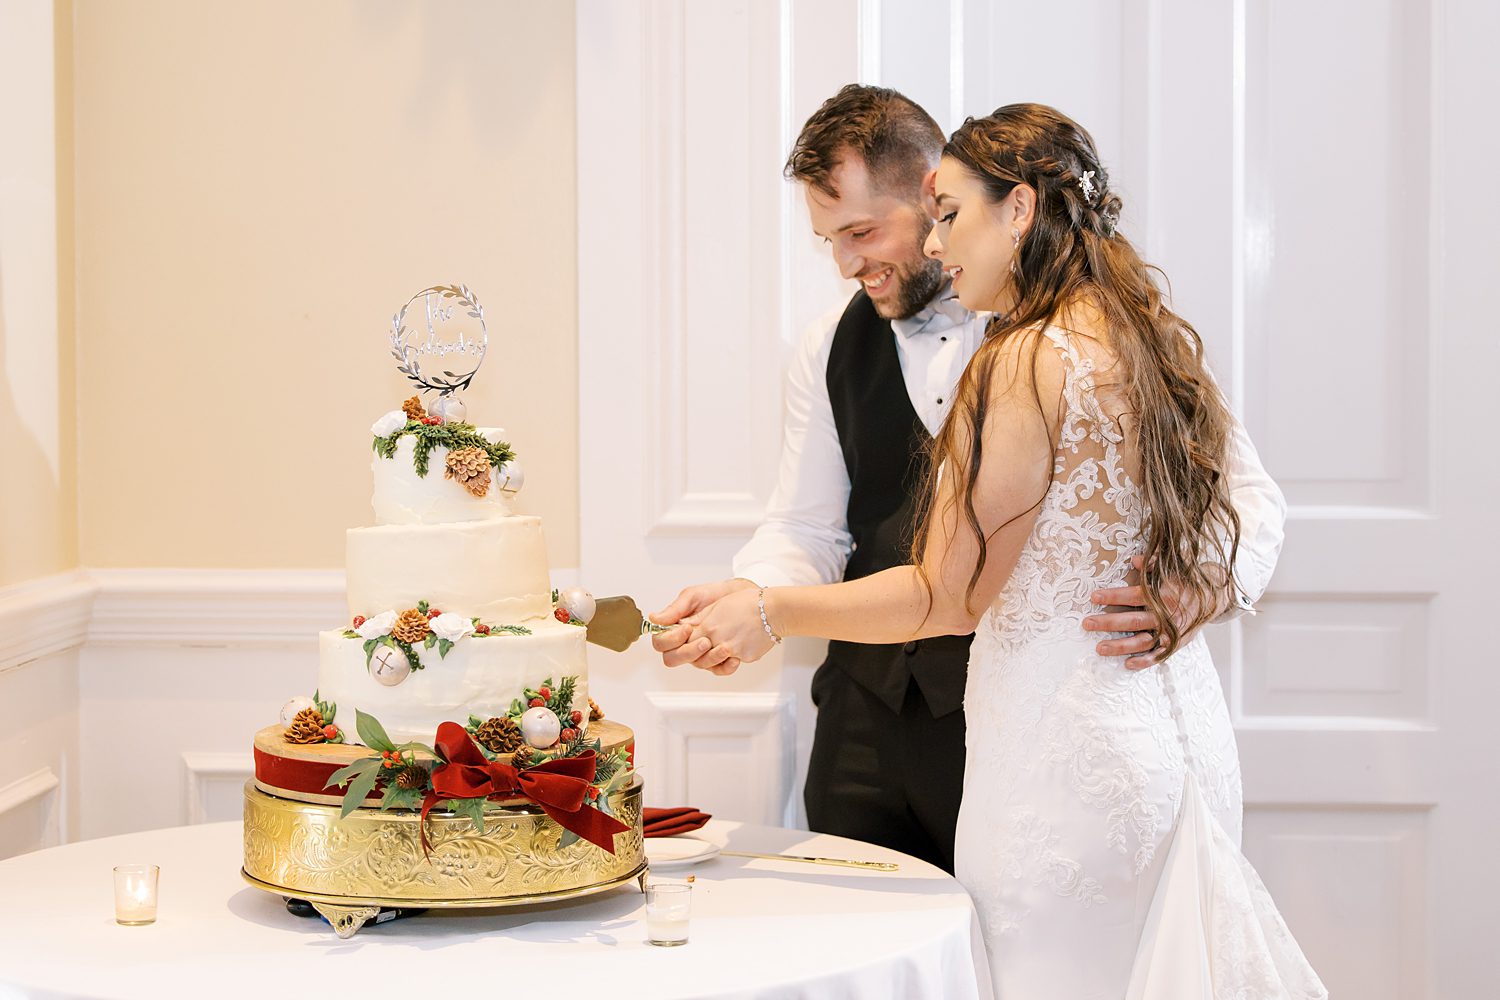 newlyweds cut wedding cake at Christmas inspired wedding reception